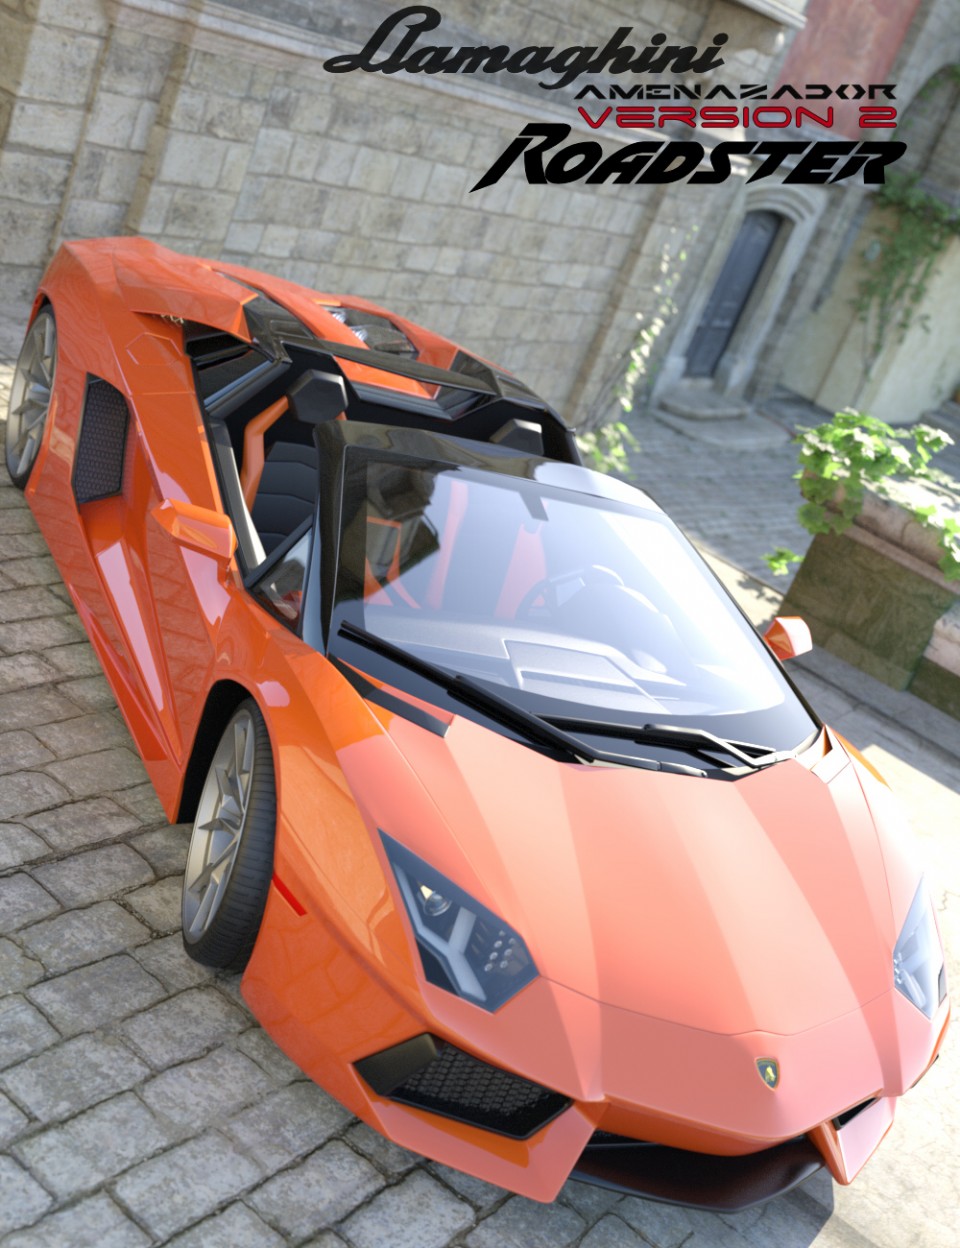 Llamaghini Amenazador Version 2 + Roadster